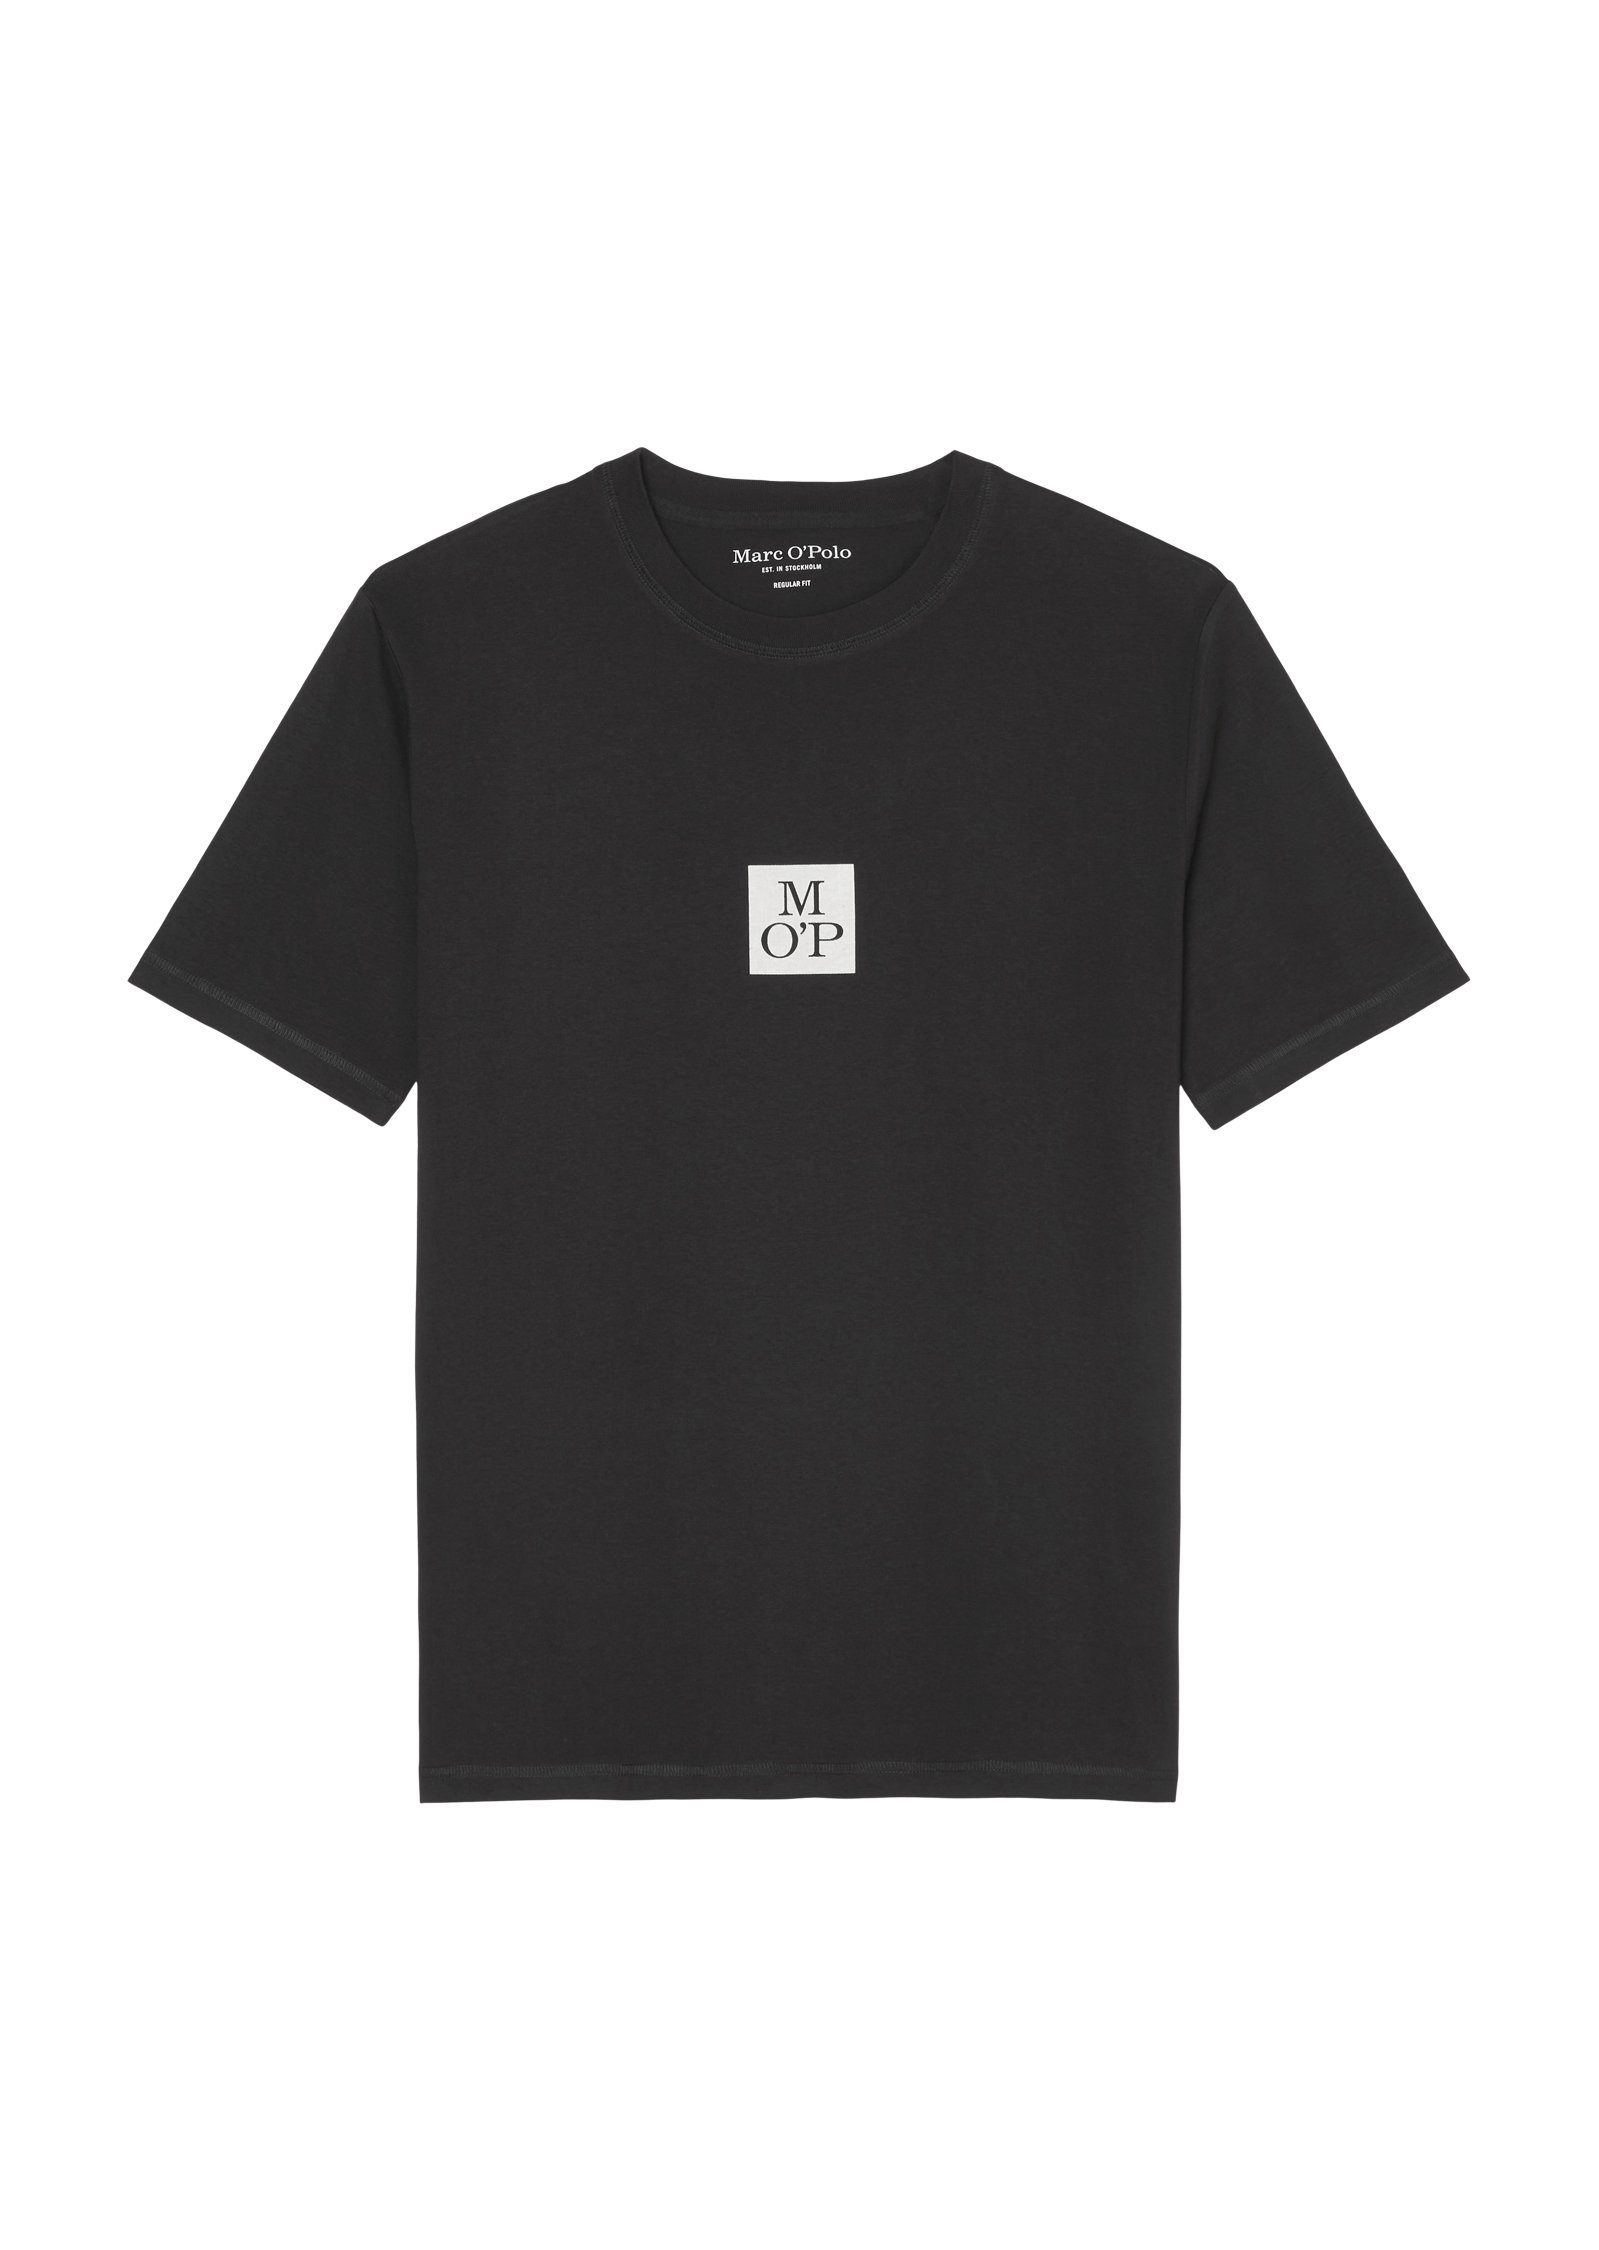 Logo T-Shirt T-Shirt details, flatlock kontrastfarbenem ribbed straight hem O'Polo mit neckline, black with Marc print,